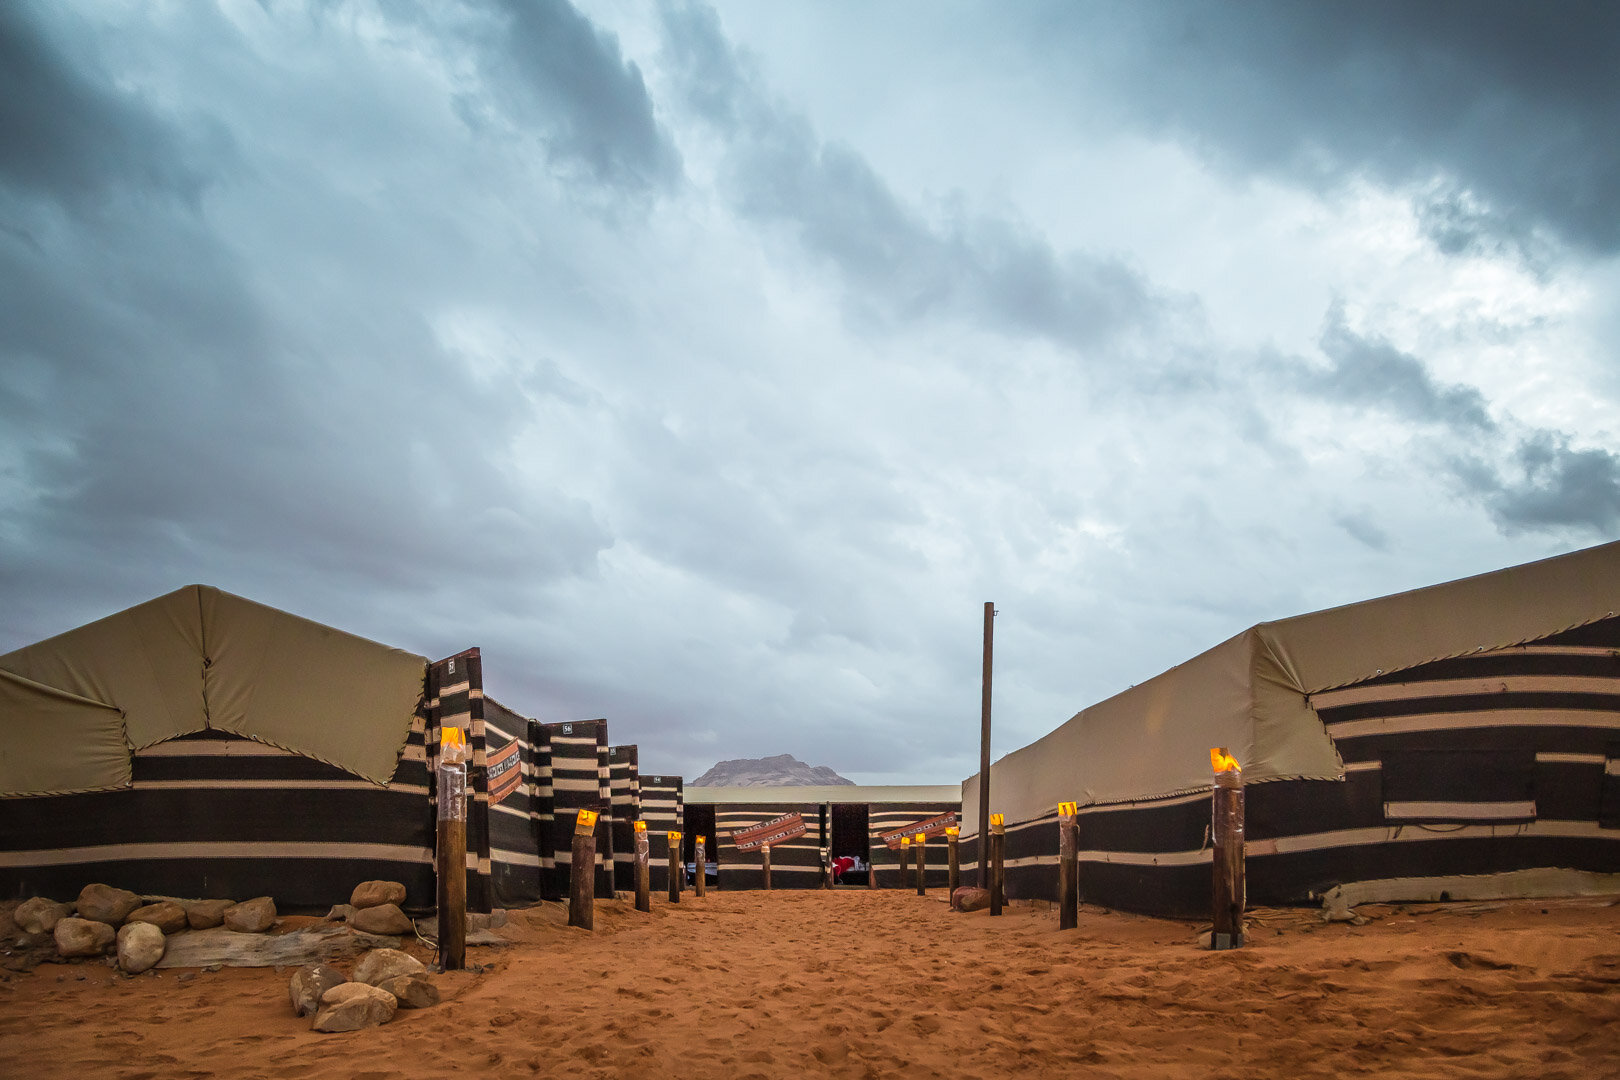 Photograph of the the Wadi Rum Campsite in Jordan by Jordan Photographer Rashad Anabtawi